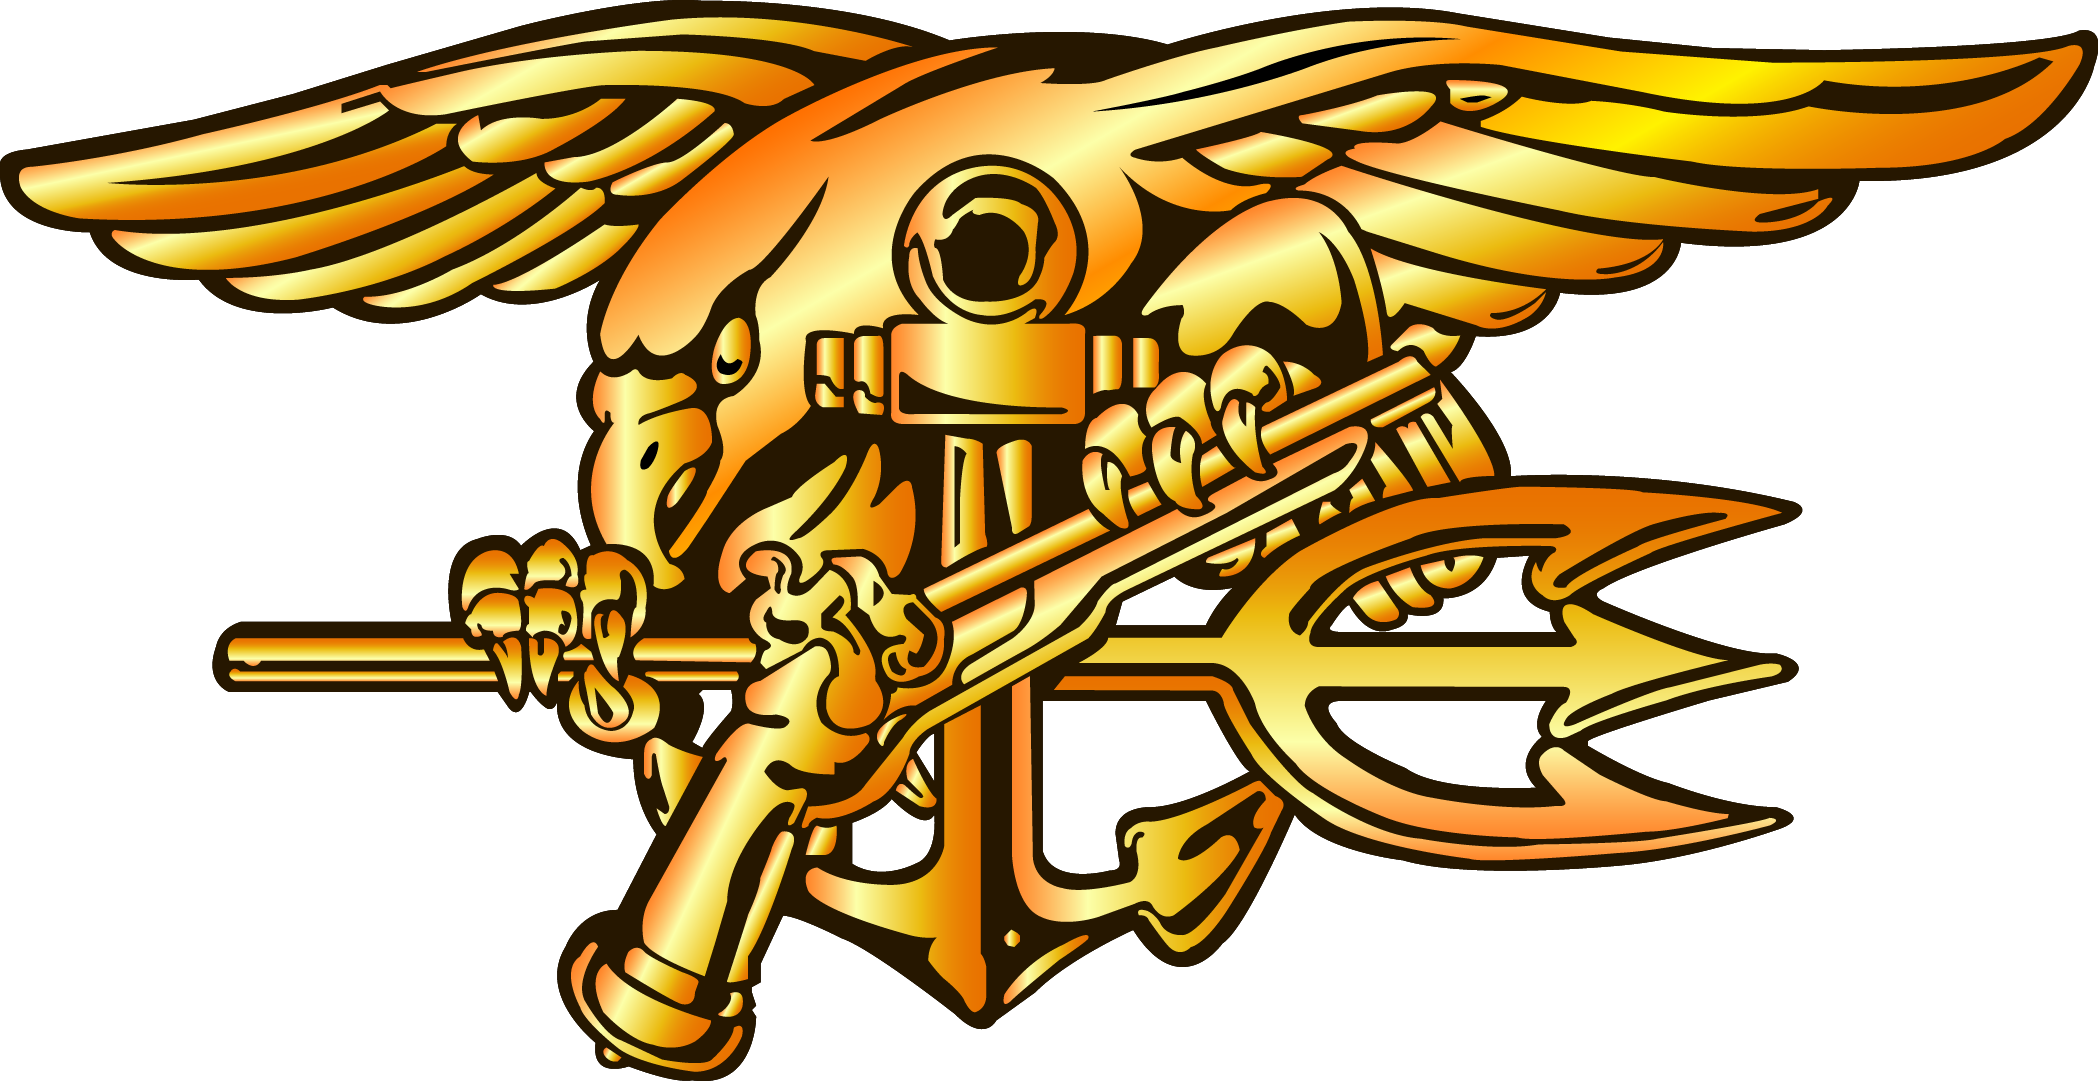 United States Navy Emblem Clipart